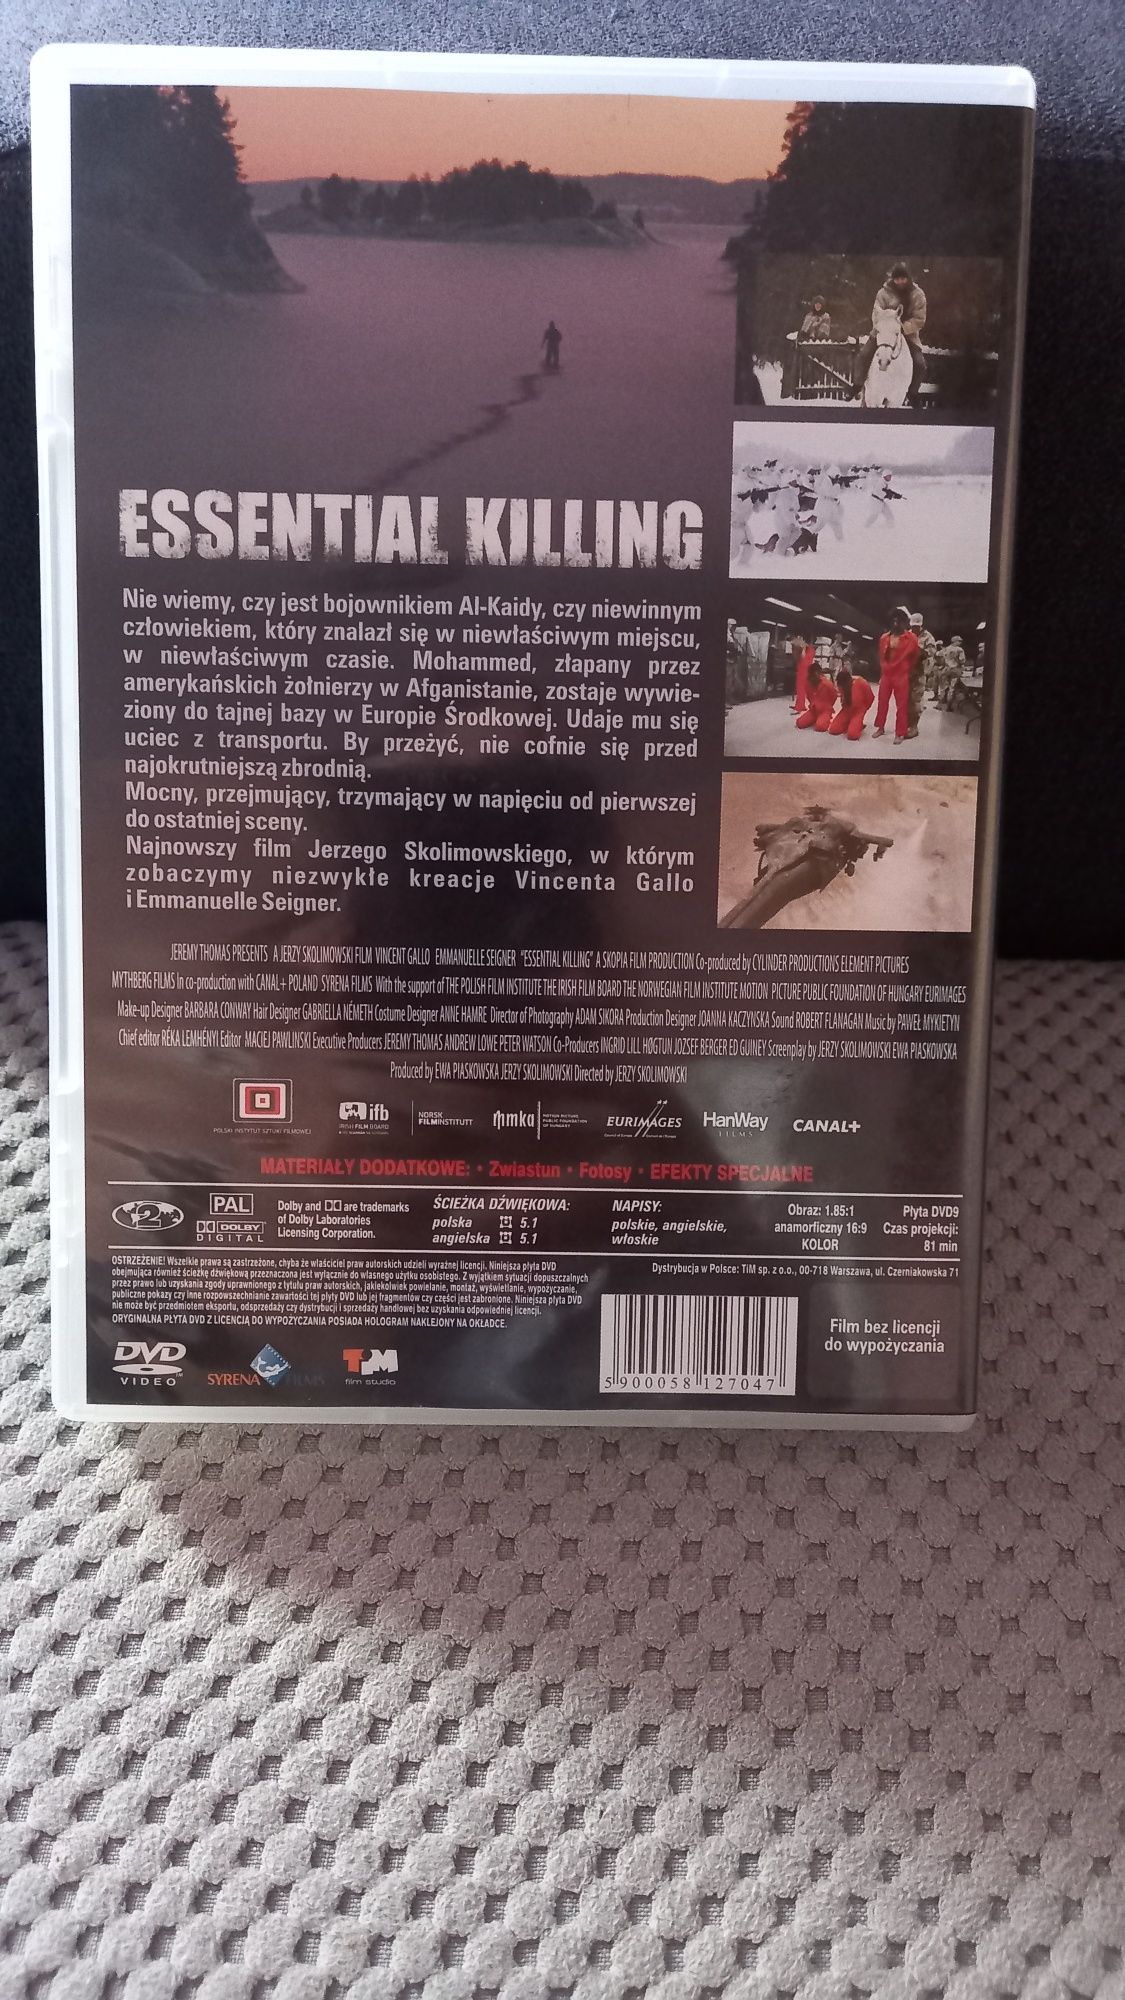 Essential killing dvd